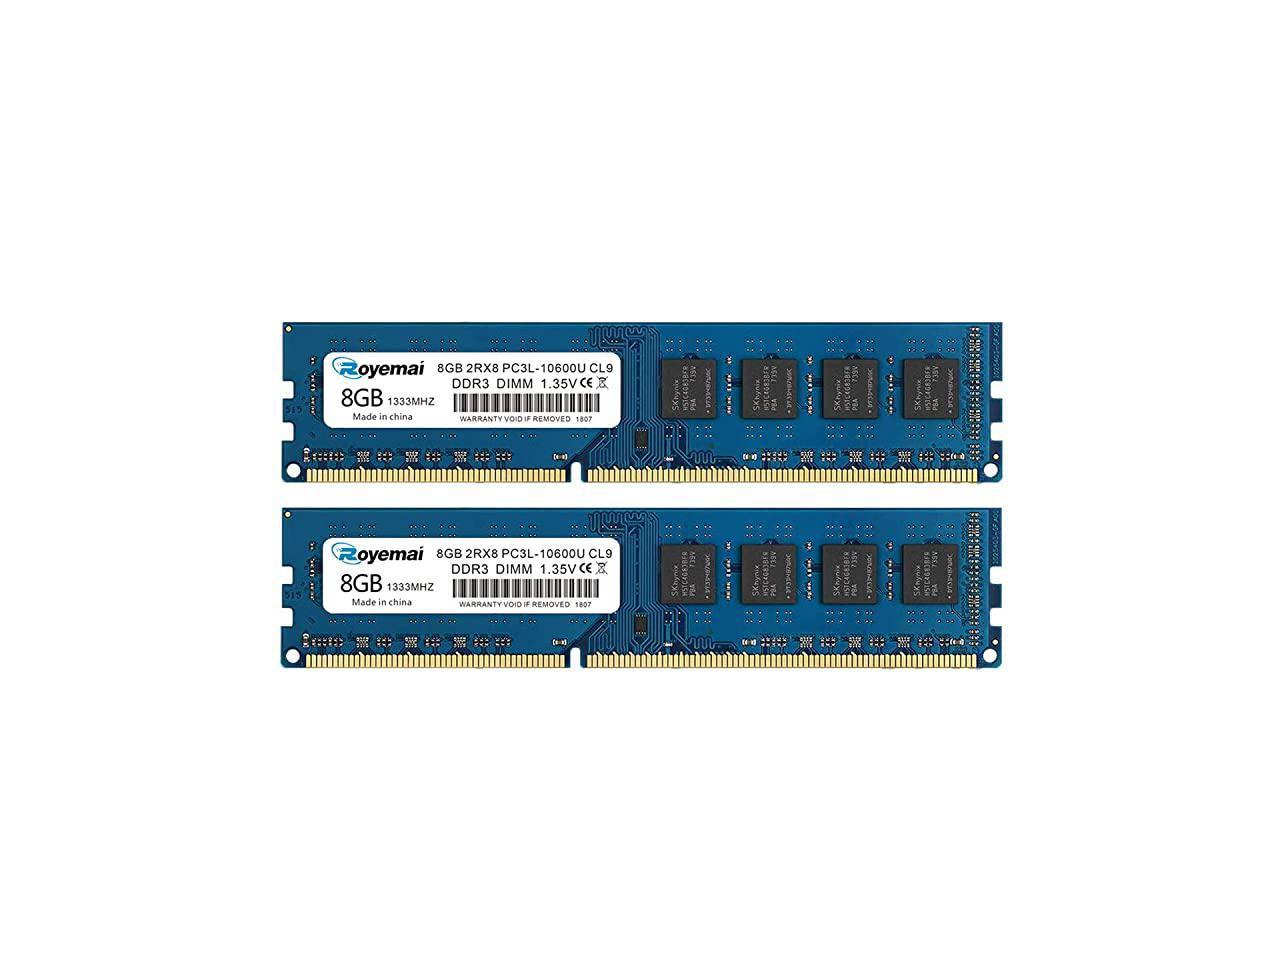 16GB Kit Royemai 8GB PC3/PC3L-10600U Dimm Memory 2Rx8 1.35V/1.5V CL9 Desktop RAM DDR3L/DDR3 10600 1333MHz Udimm 2x8GB 